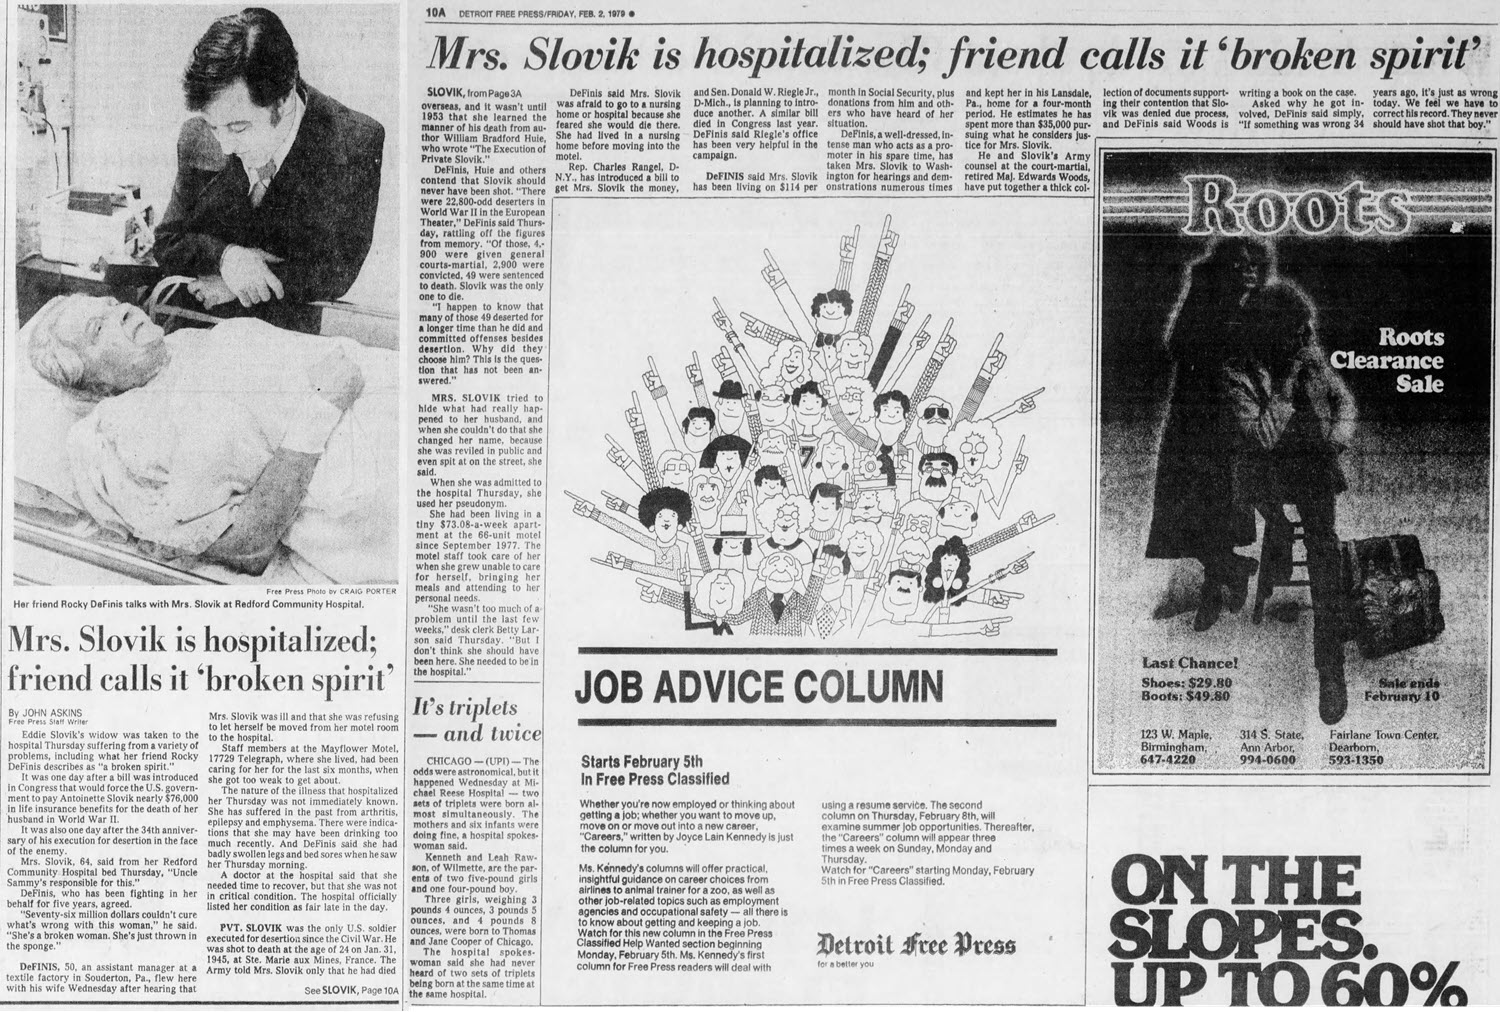 Mayflower Motel - Feb 2 1979 Article On Mrs Slovik